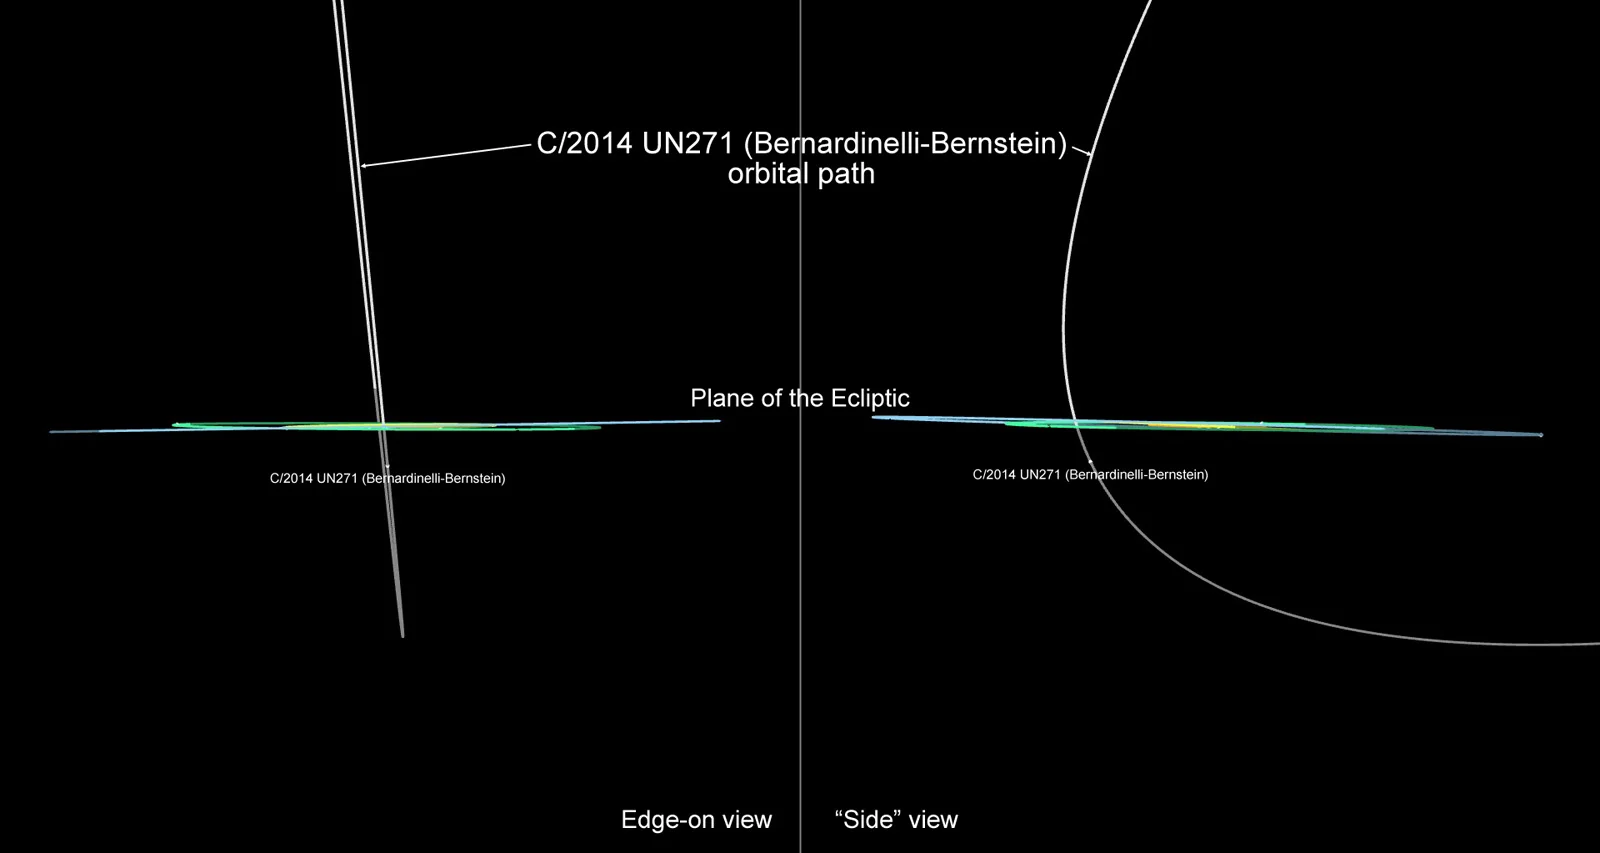 Comet-2014-UN271-eccentric-orbit-Labelled